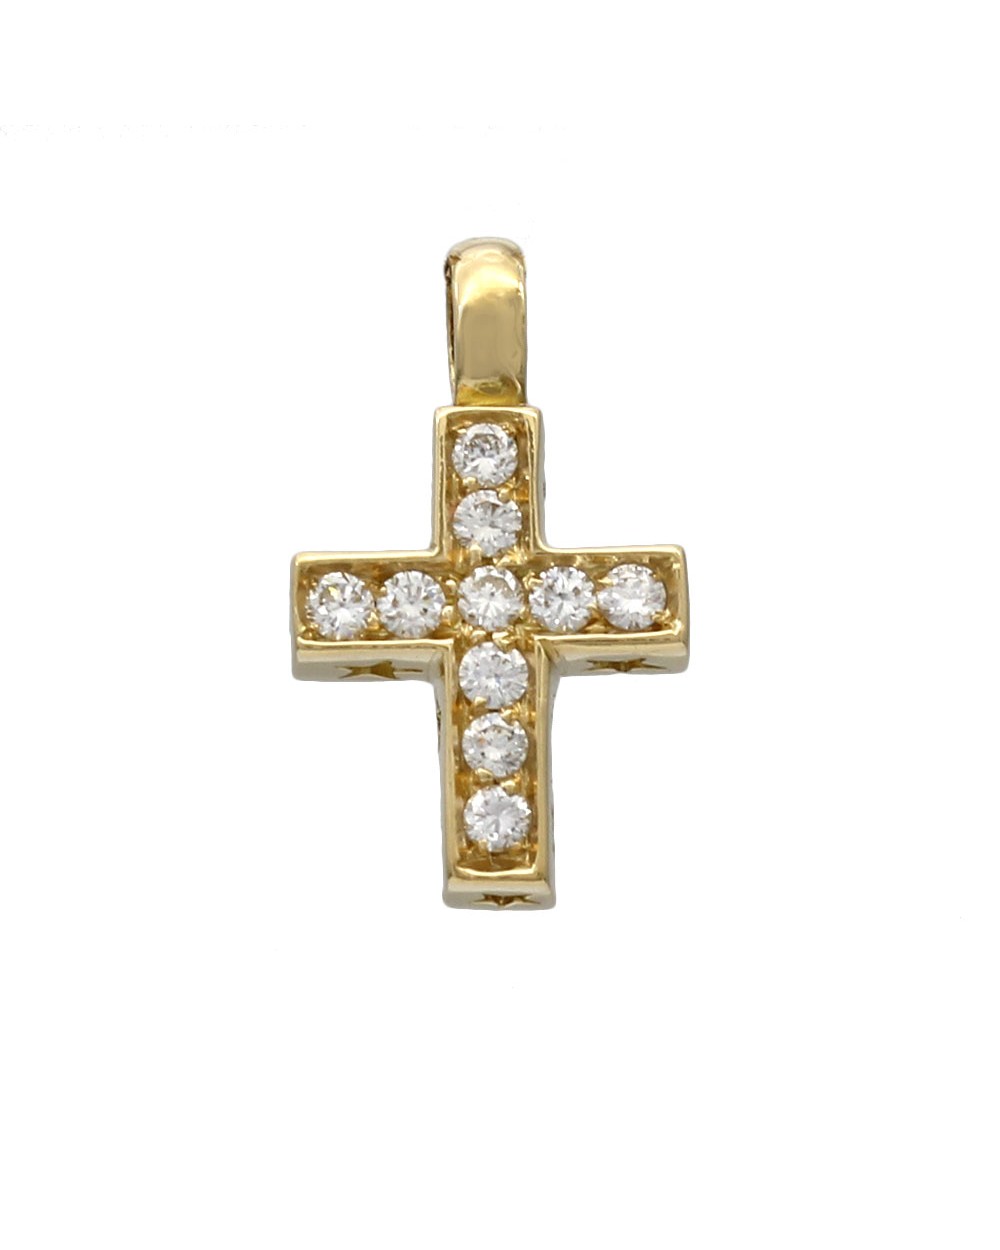 Diamond Cross Pendant with Cutout Star Design in 18k Yellow Gold